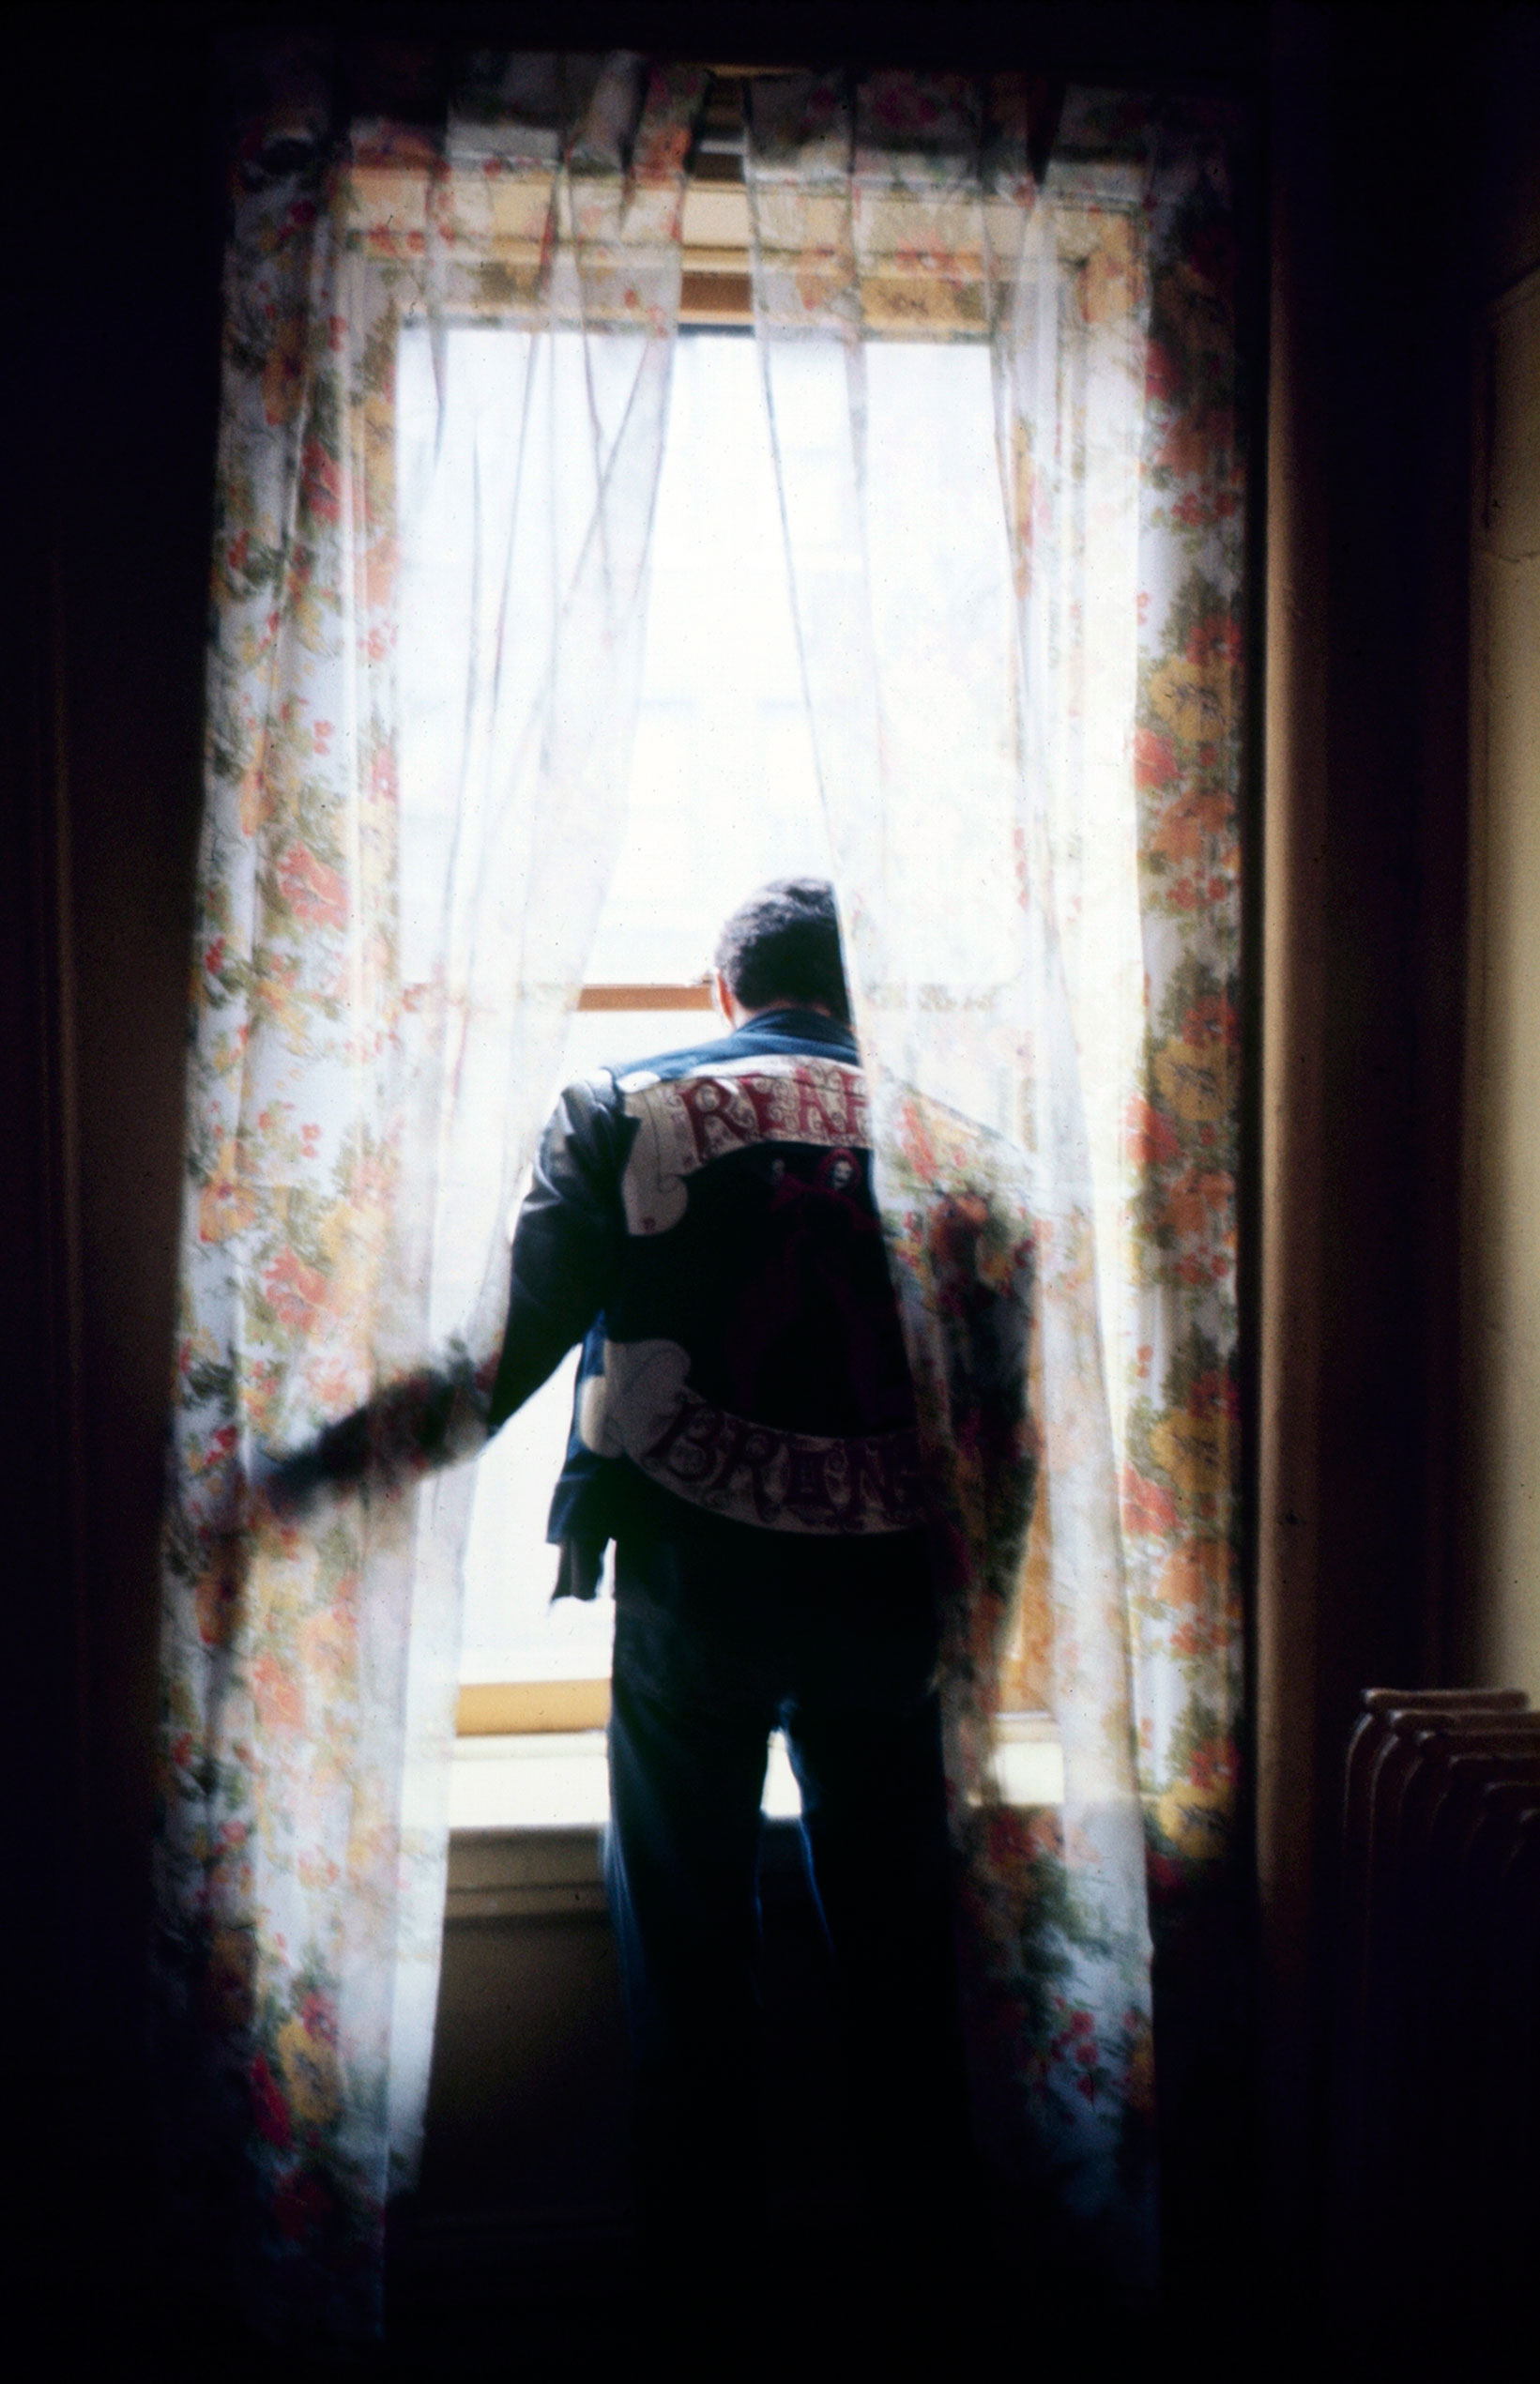 Eddie Cuevas, president of the Reapers street gang, peers out a window in the South Bronx, 1972.